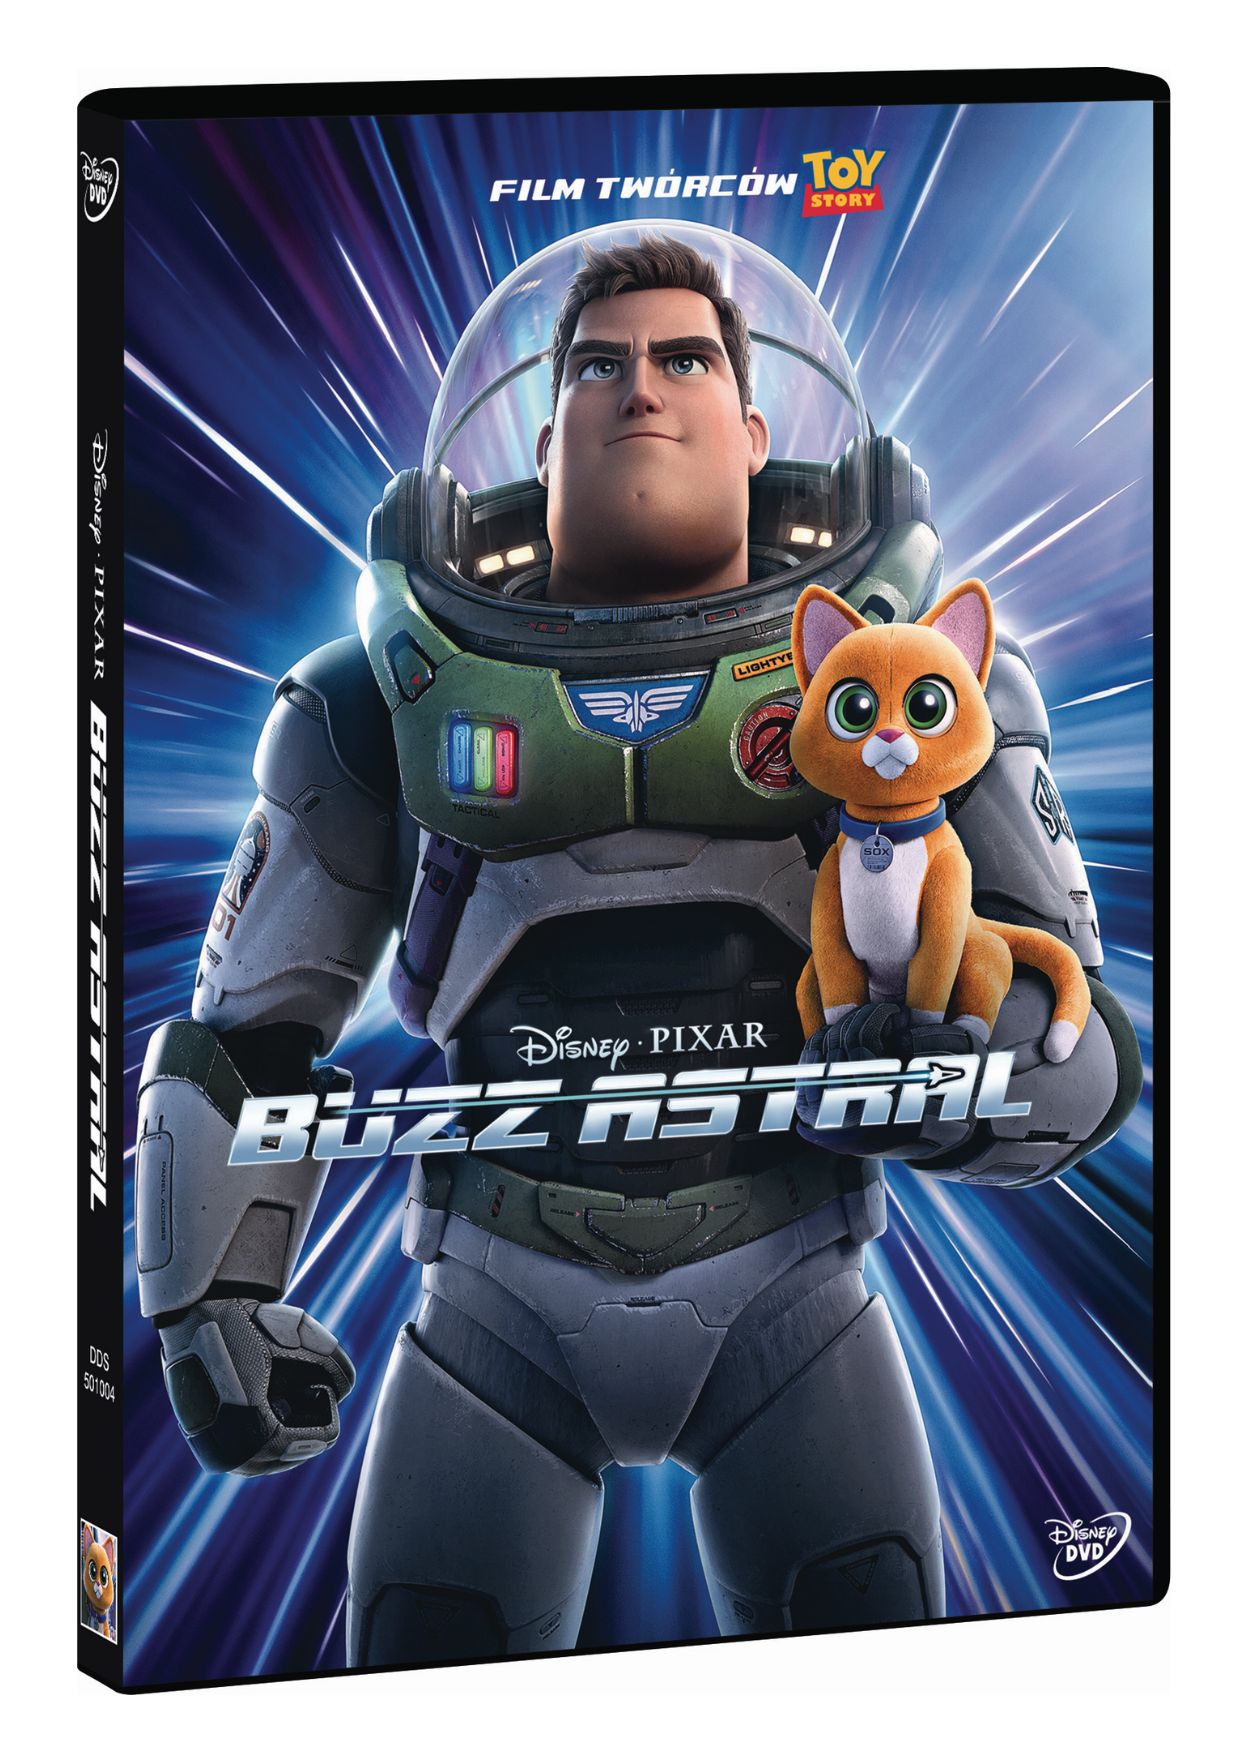 Okładka filmu na płycie DVD o tytule Buzz Astral